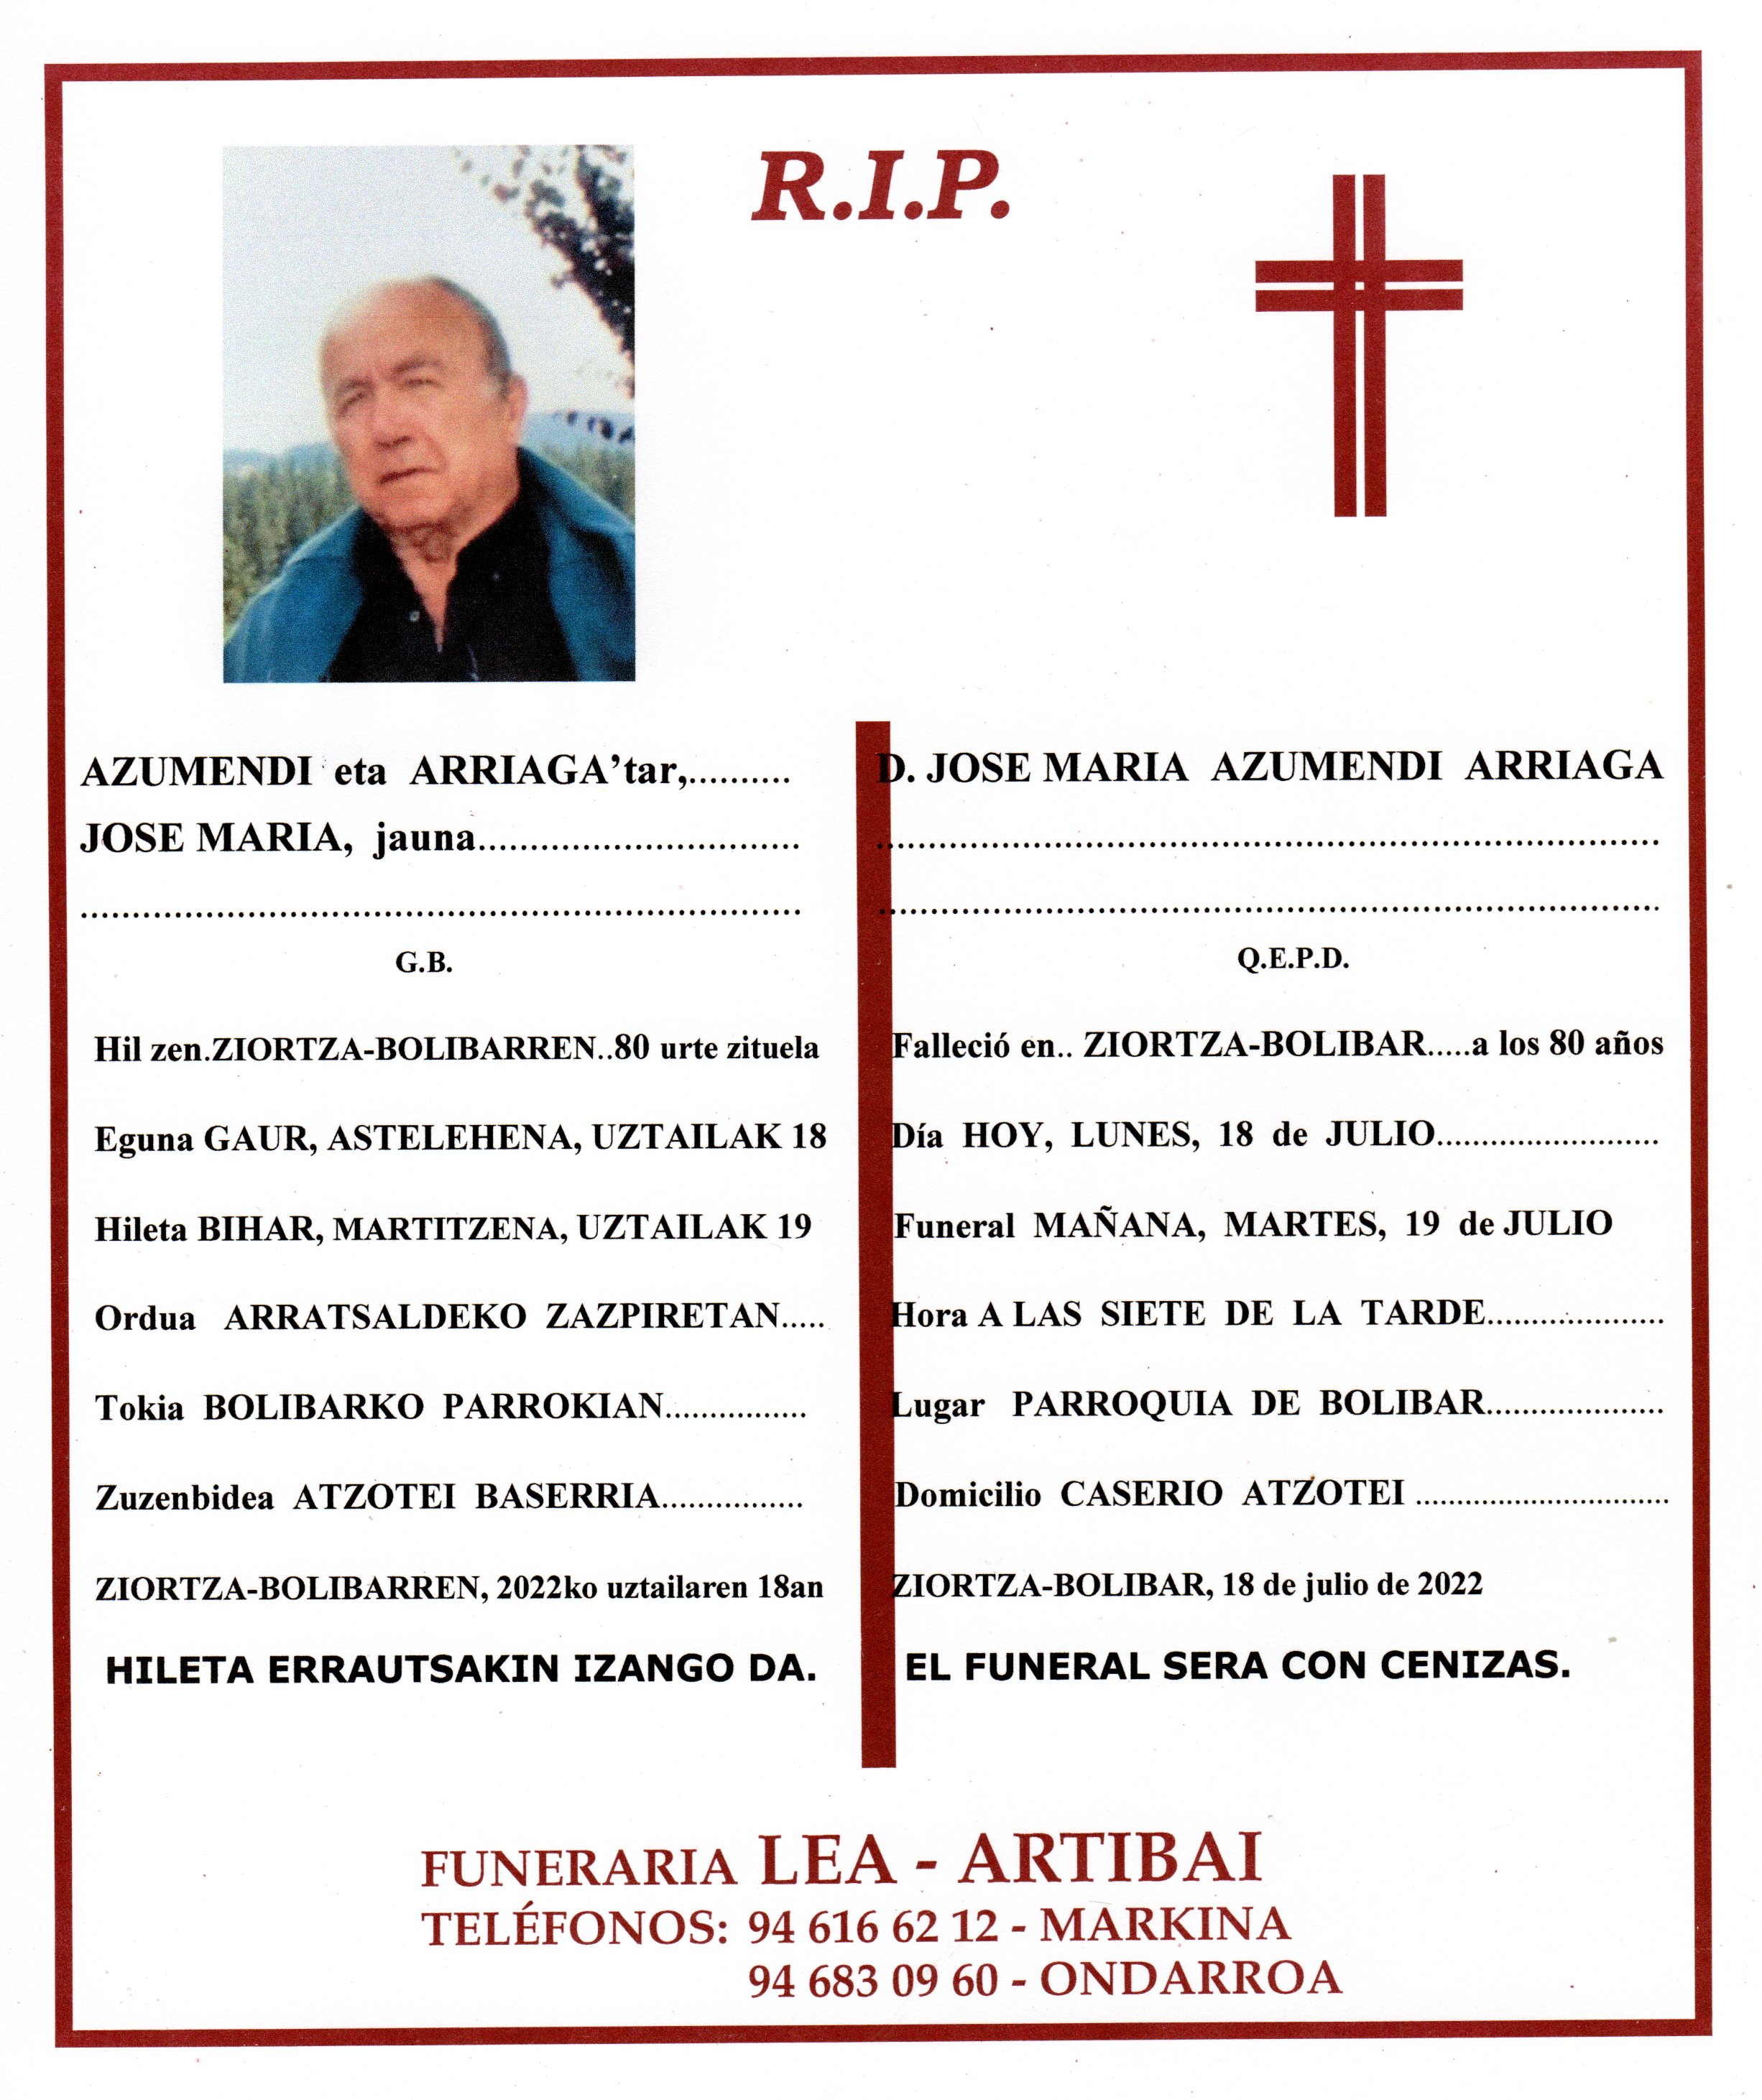 Jose Maria Azumendi Arriaga